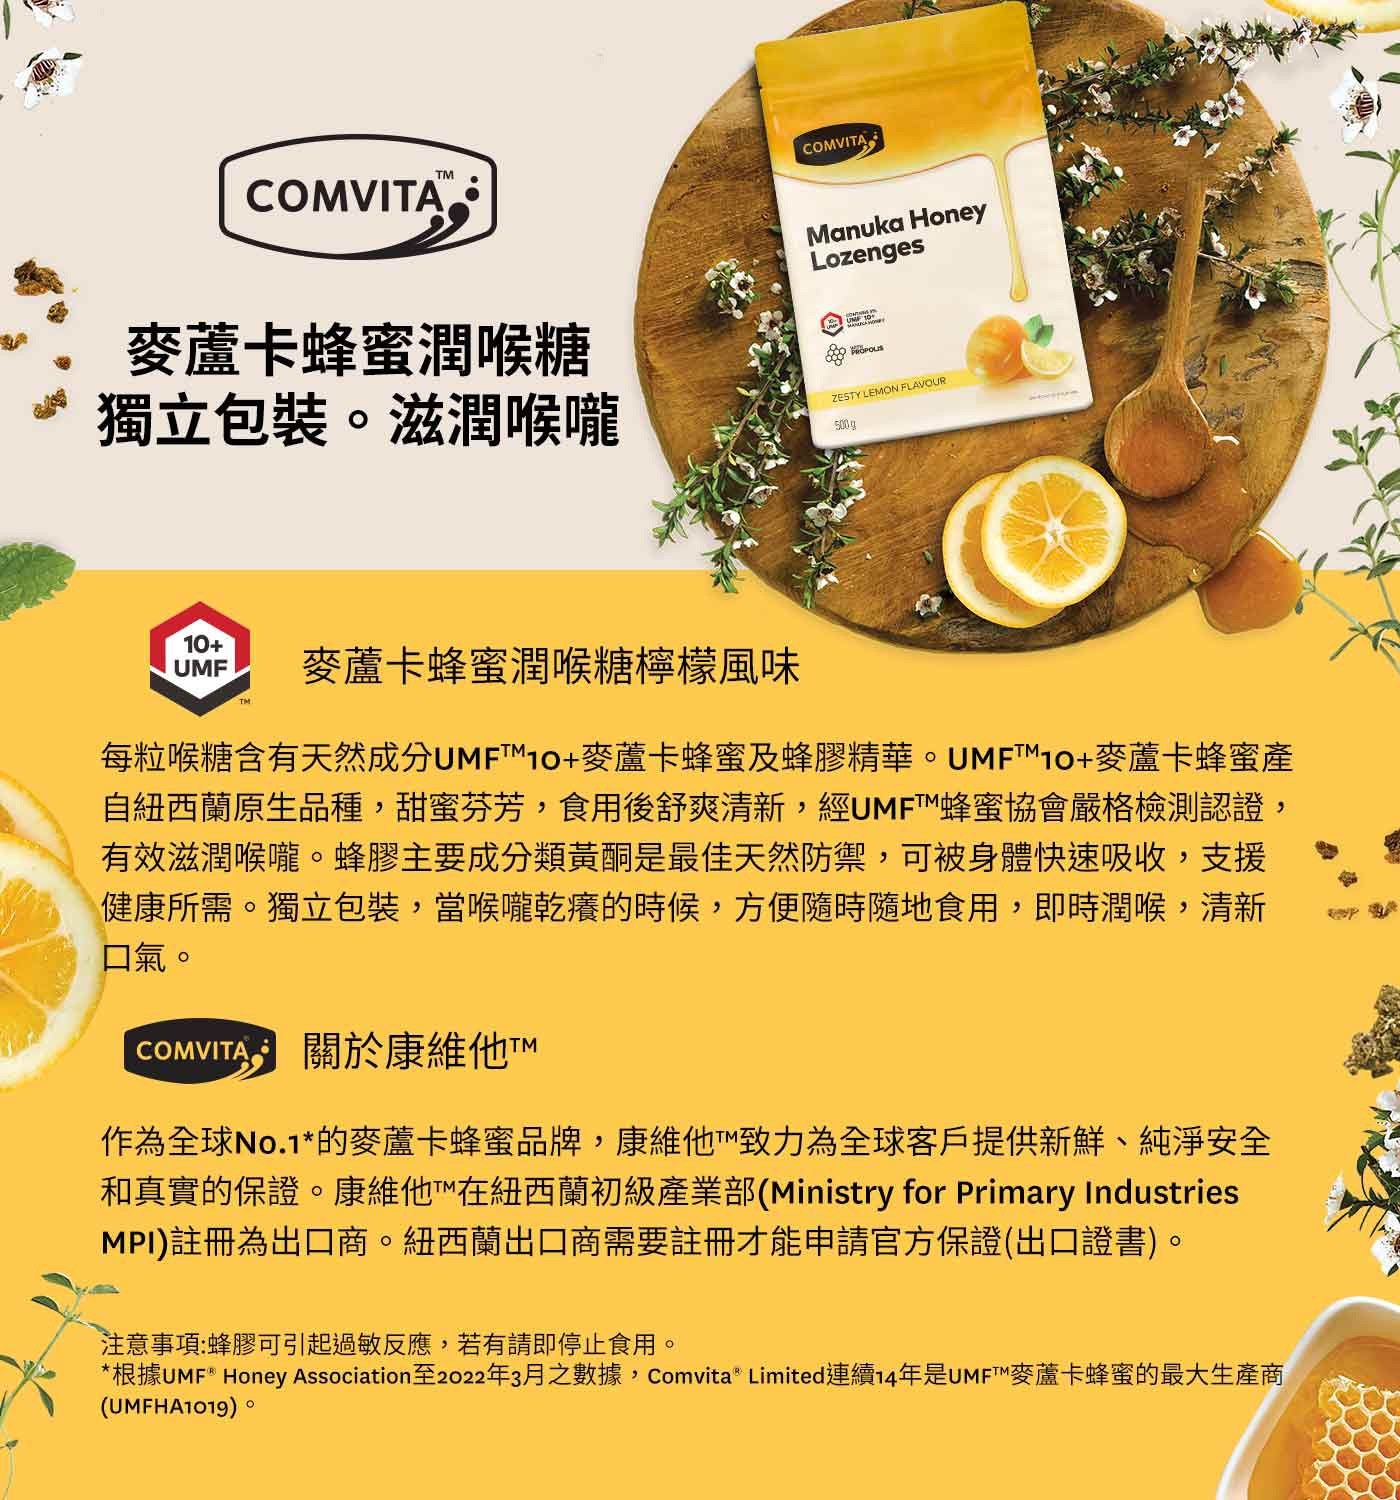 Comvita 康維他麥蘆卡蜂蜜潤喉糖檸檬風味幫助潤喉、舒爽清新，獨立包裝，方便攜帶。